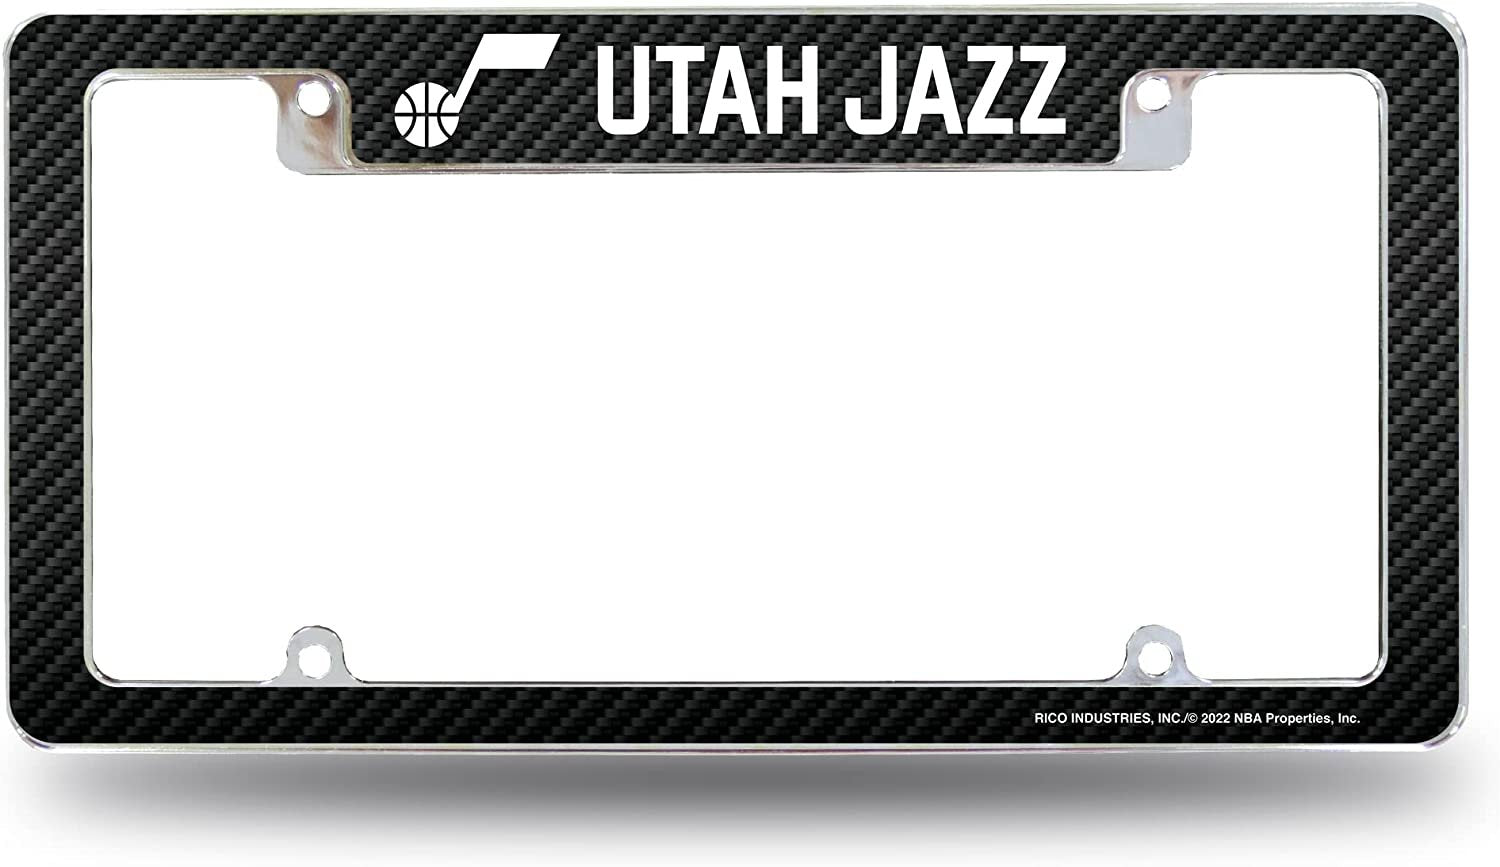 Utah Jazz Metal License Plate Frame Chrome Tag Cover 12x6 Inch Carbon Fiber Design